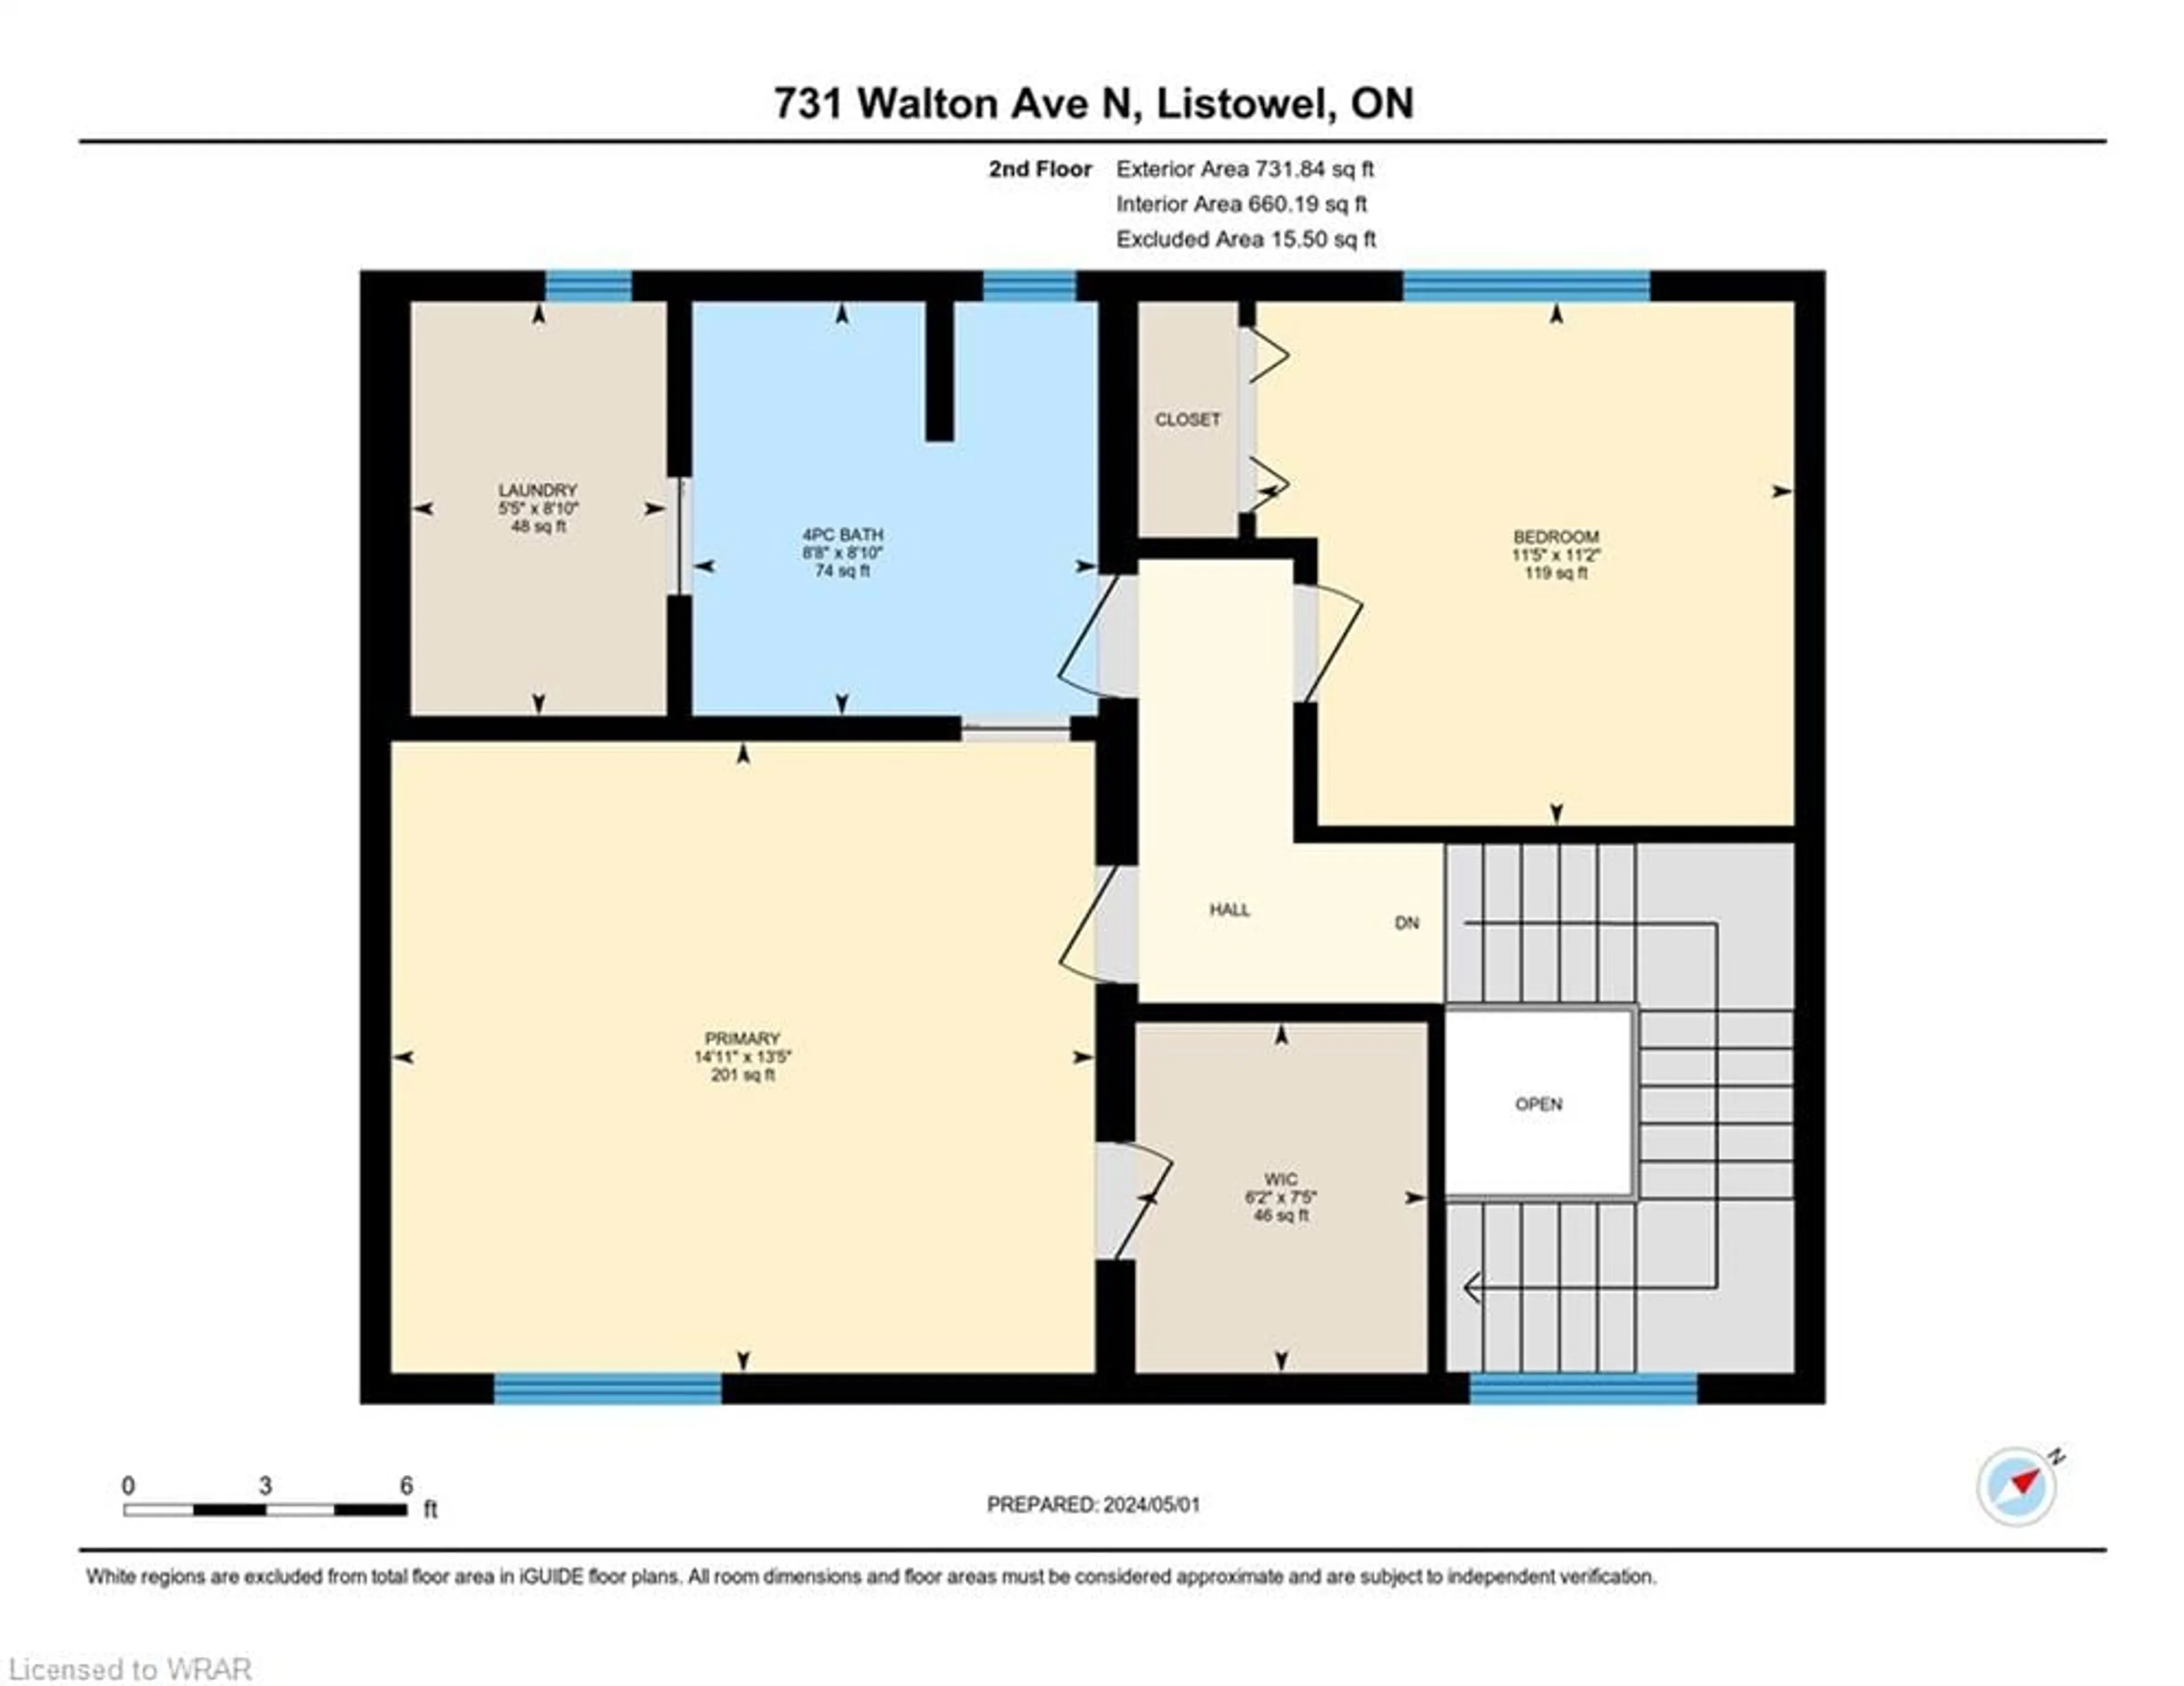 Floor plan for 731 Walton Ave, Listowel Ontario N4W 3C8